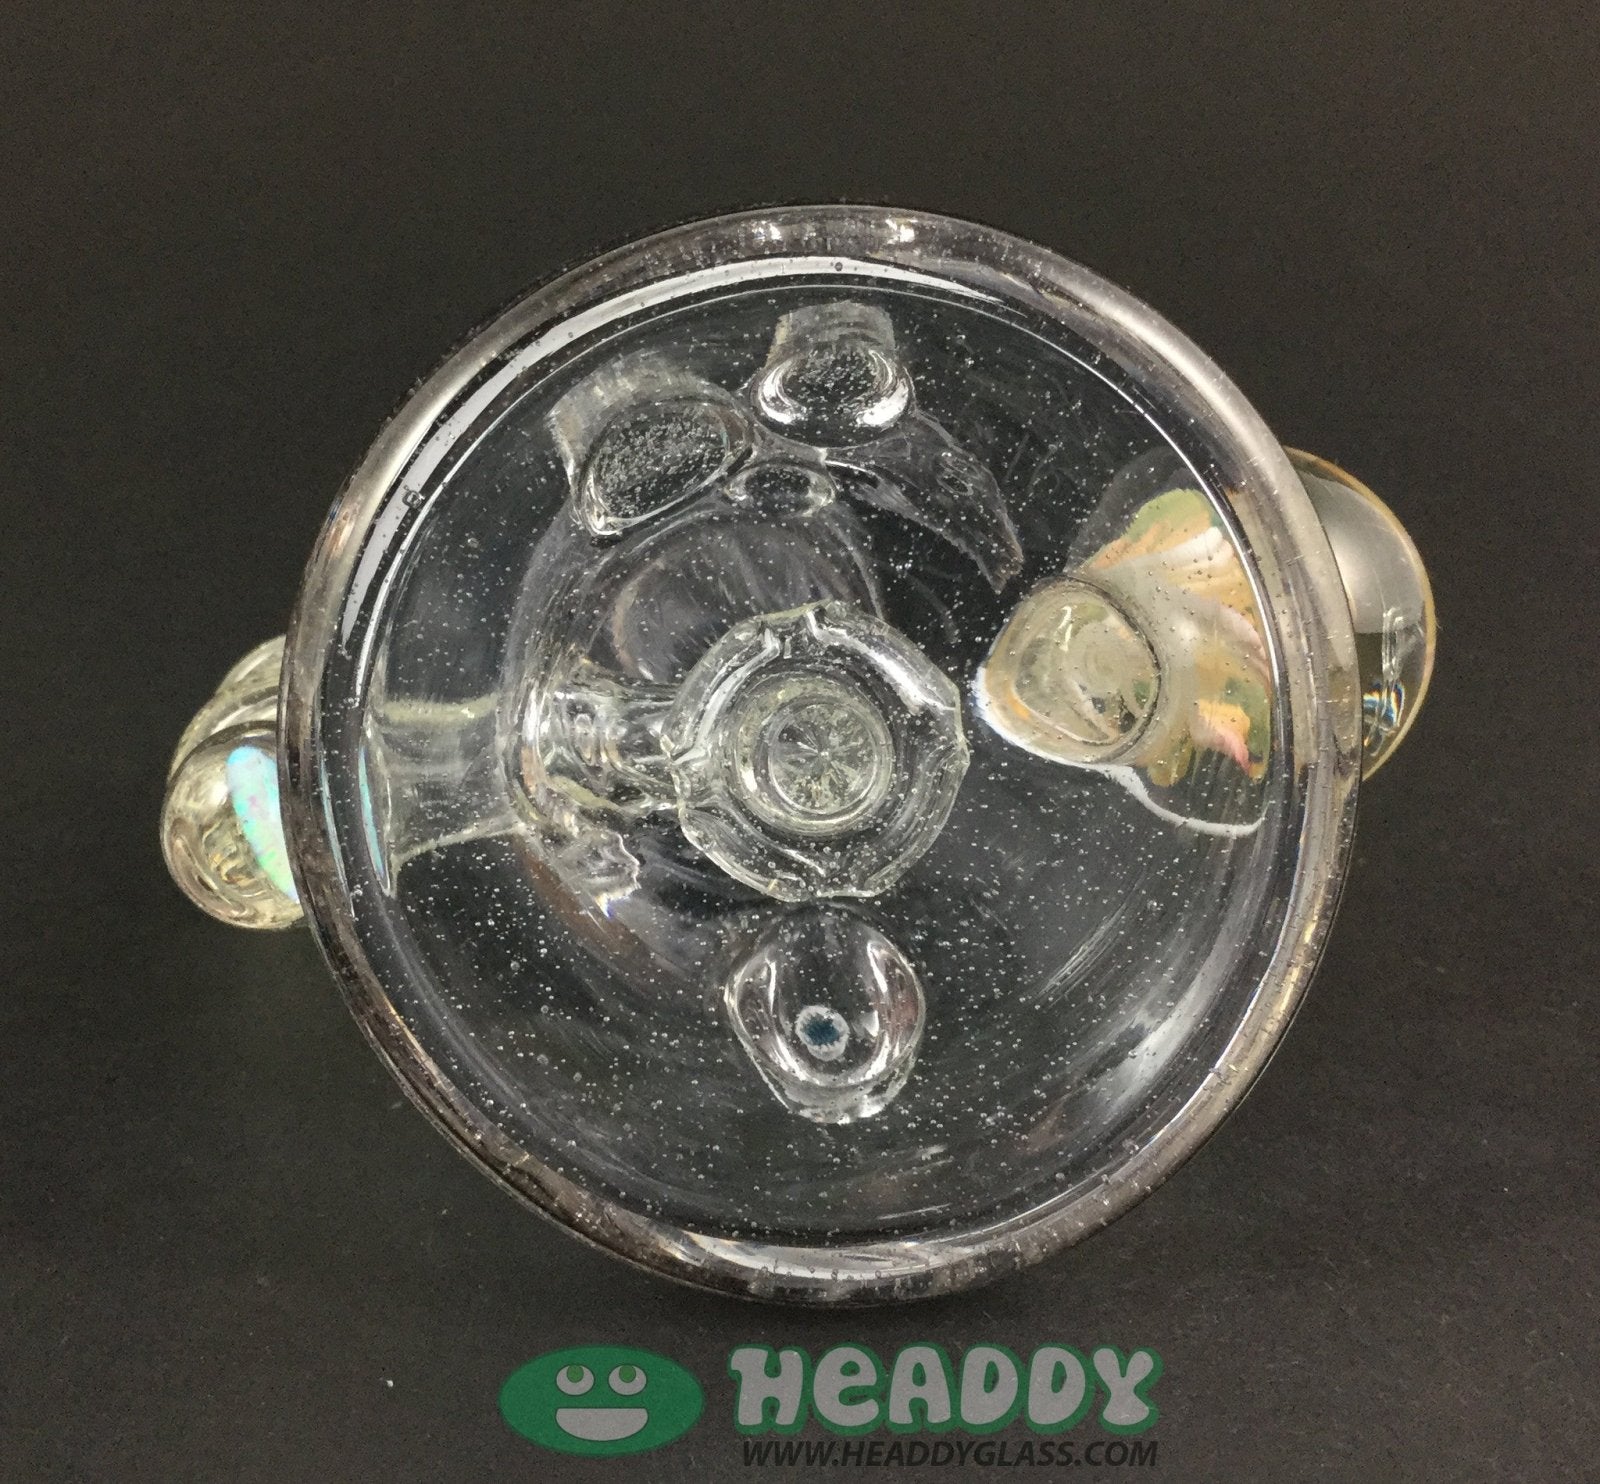 Crux Glass minitube - Headdy Glass